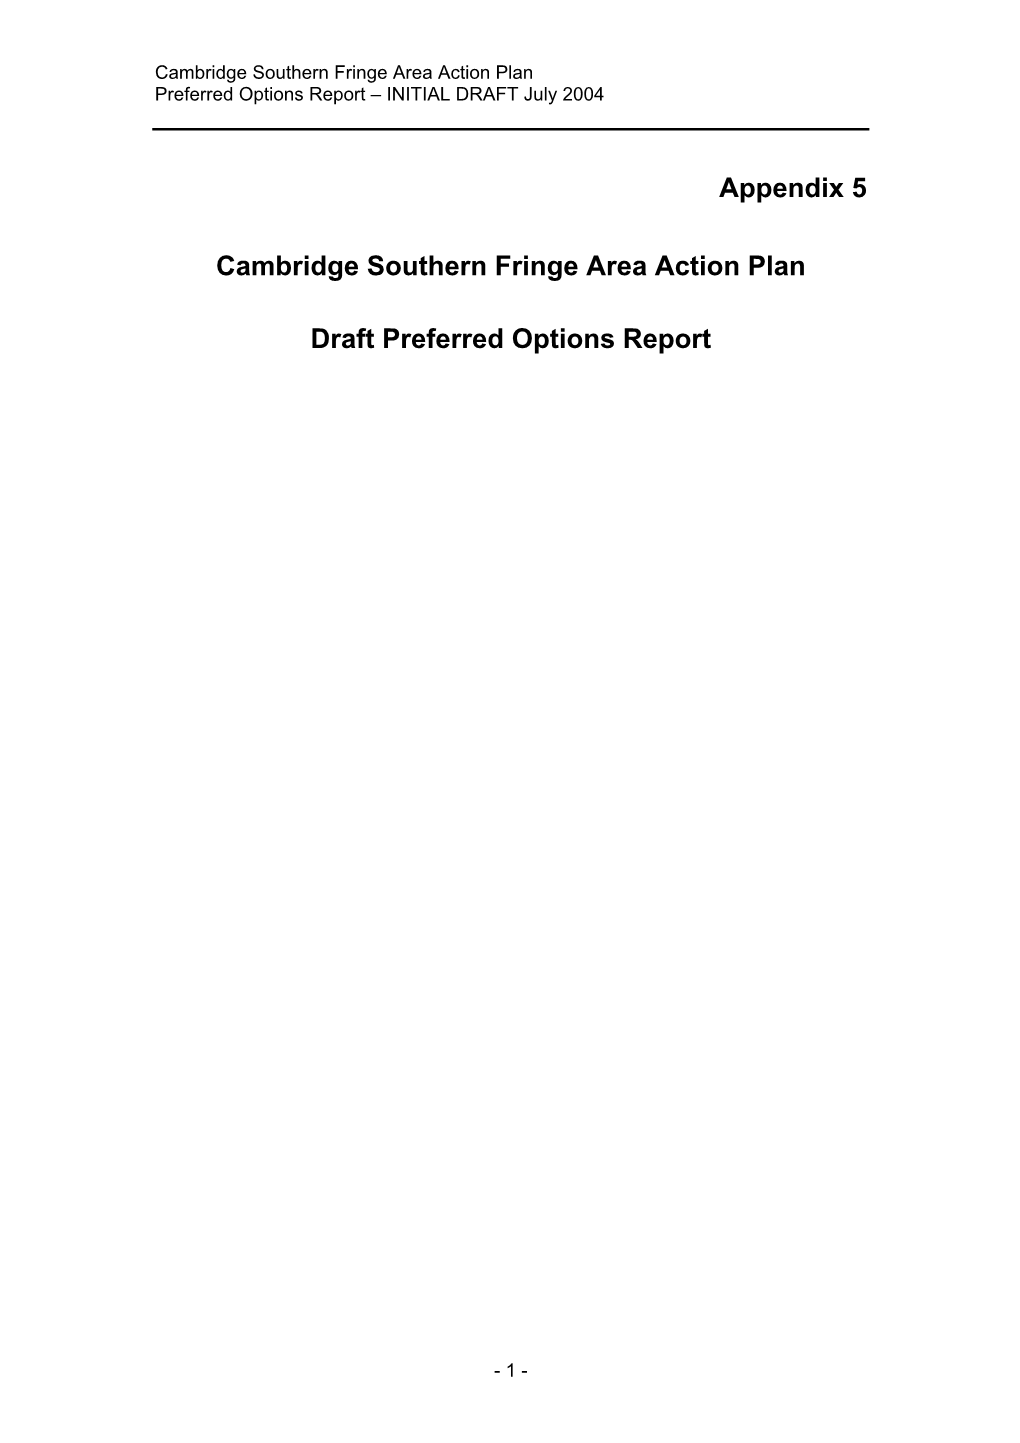 Appendix 5 Cambridge Southern Fringe Area Action Plan Draft